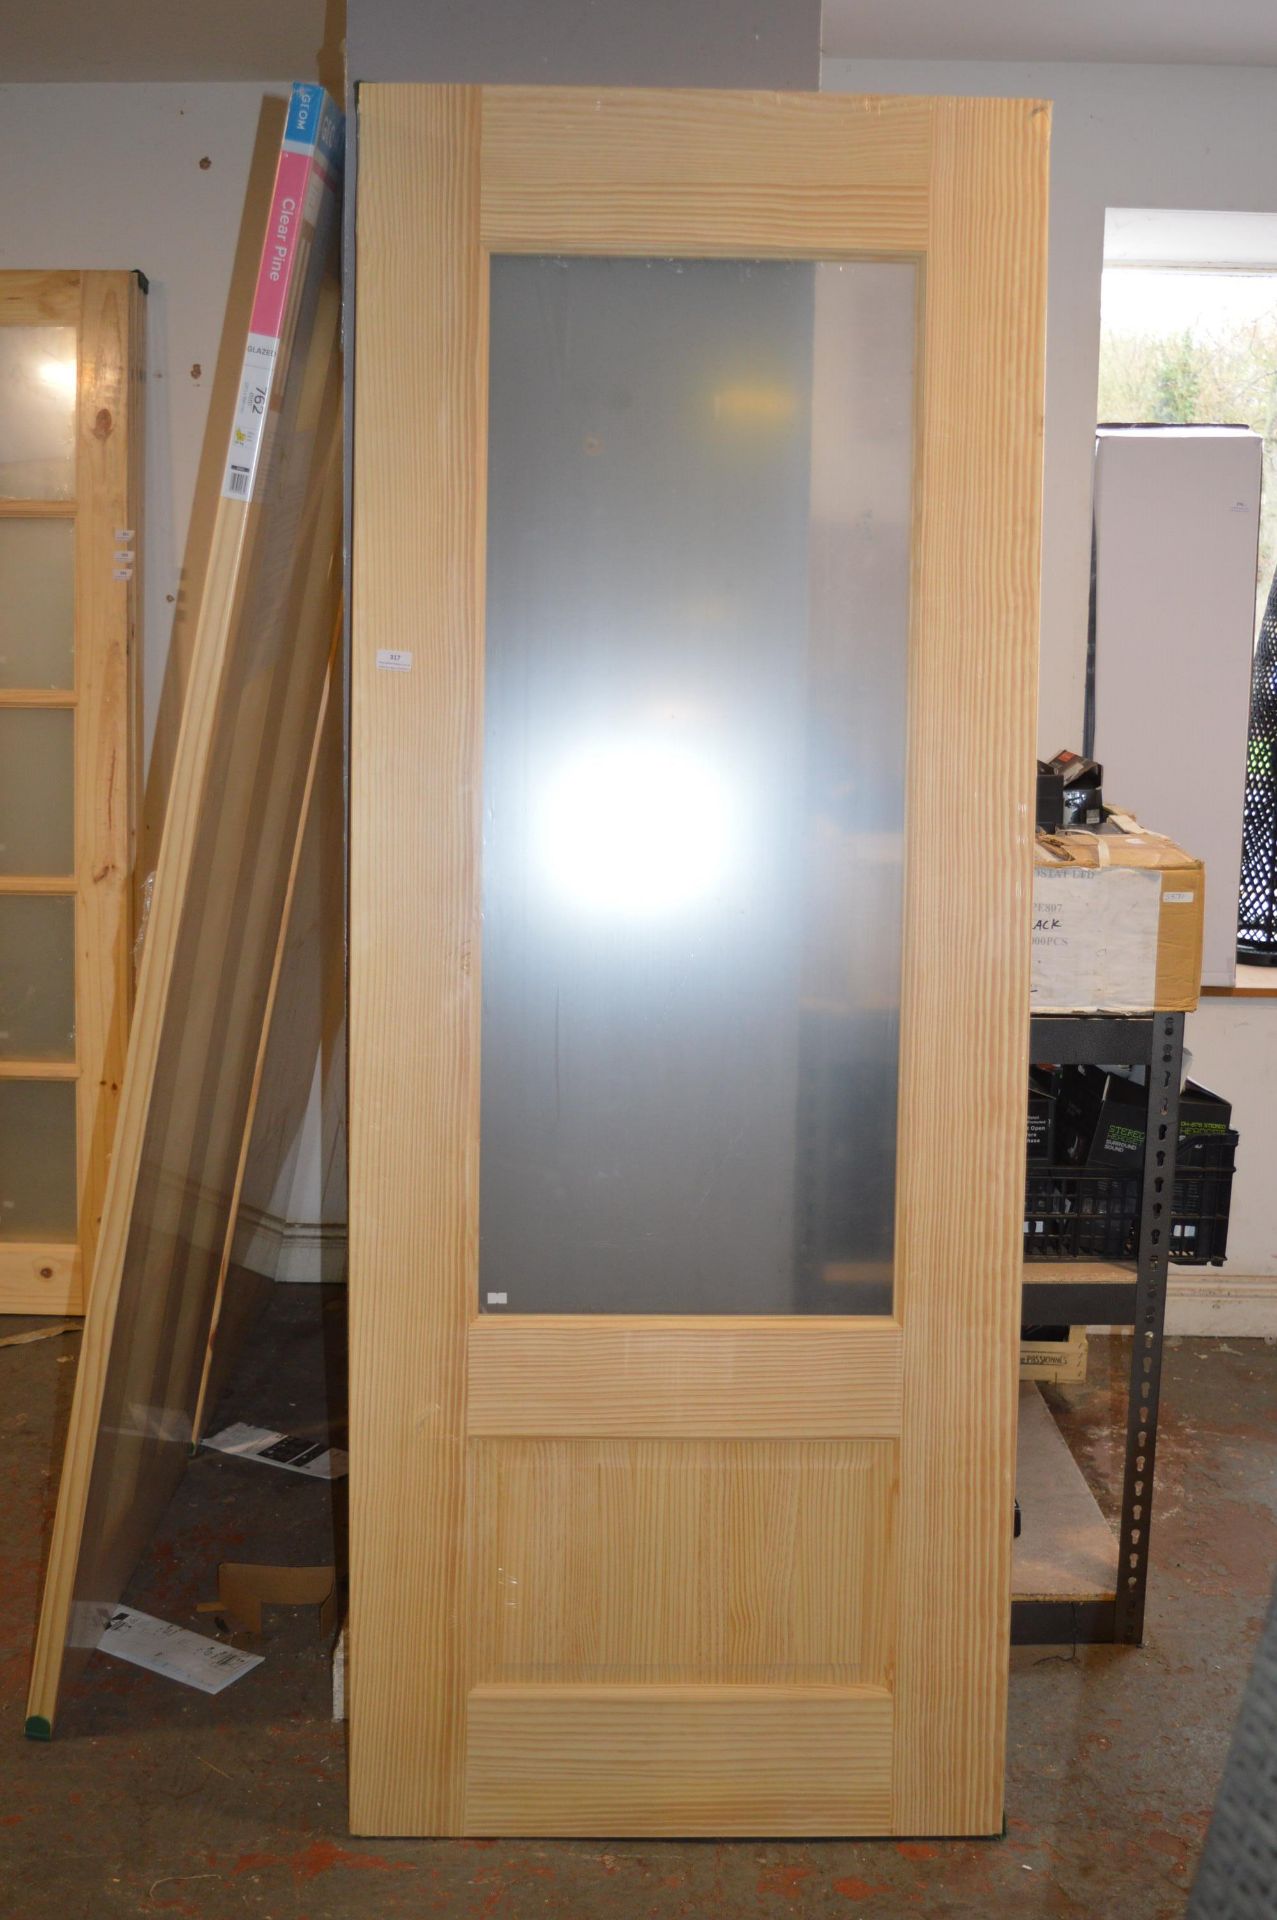 *Clear Pine Glazed Internal Door 1981x762mm